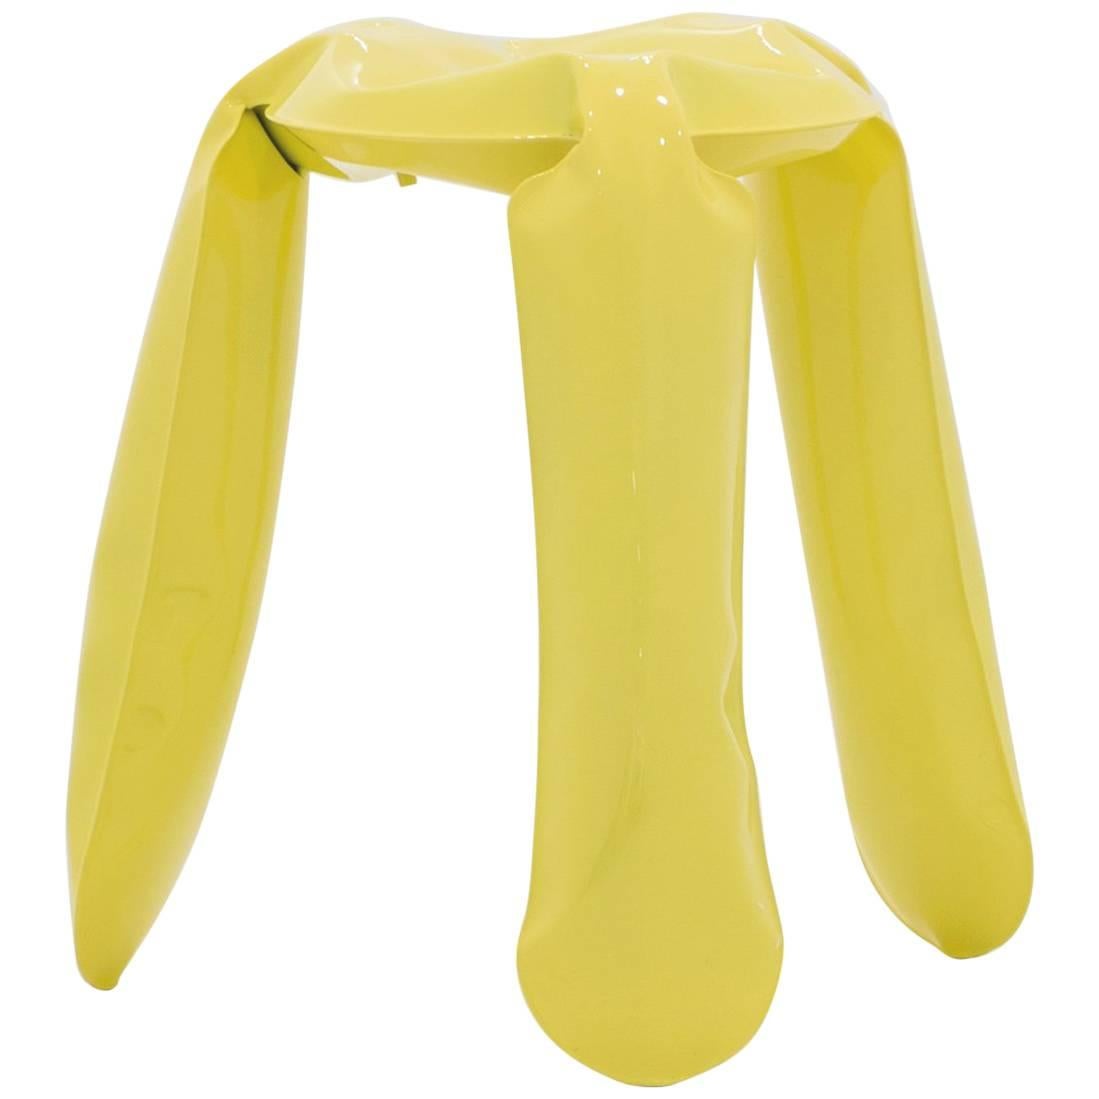 "Plopp" Stool, Standard Size, Yellow Version For Sale